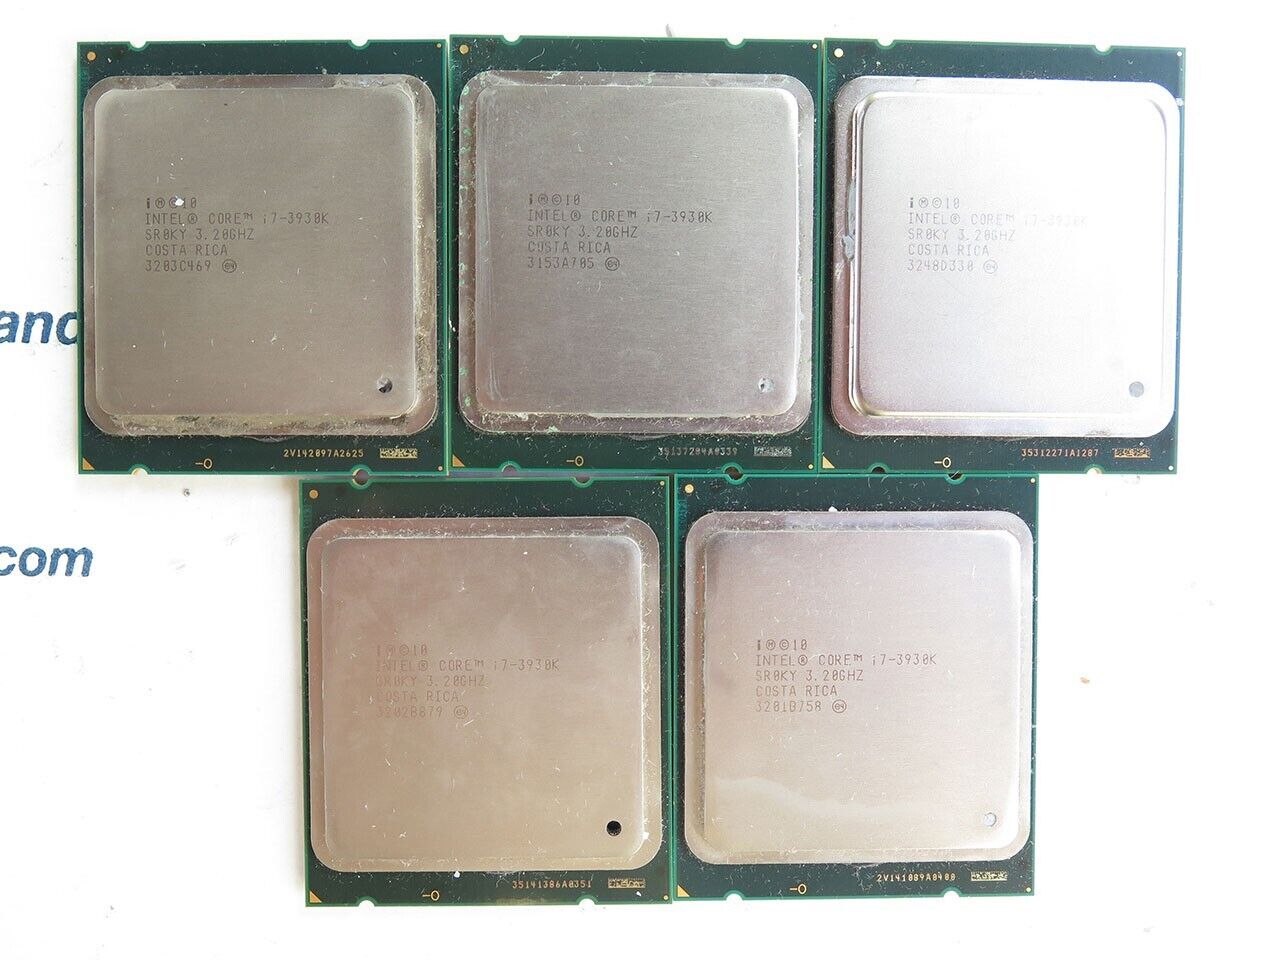 Lot of 5 Intel Core i7-3930K 3.20GHz LGA2011 6 Core LGA2011 12MB CPU SR0KY